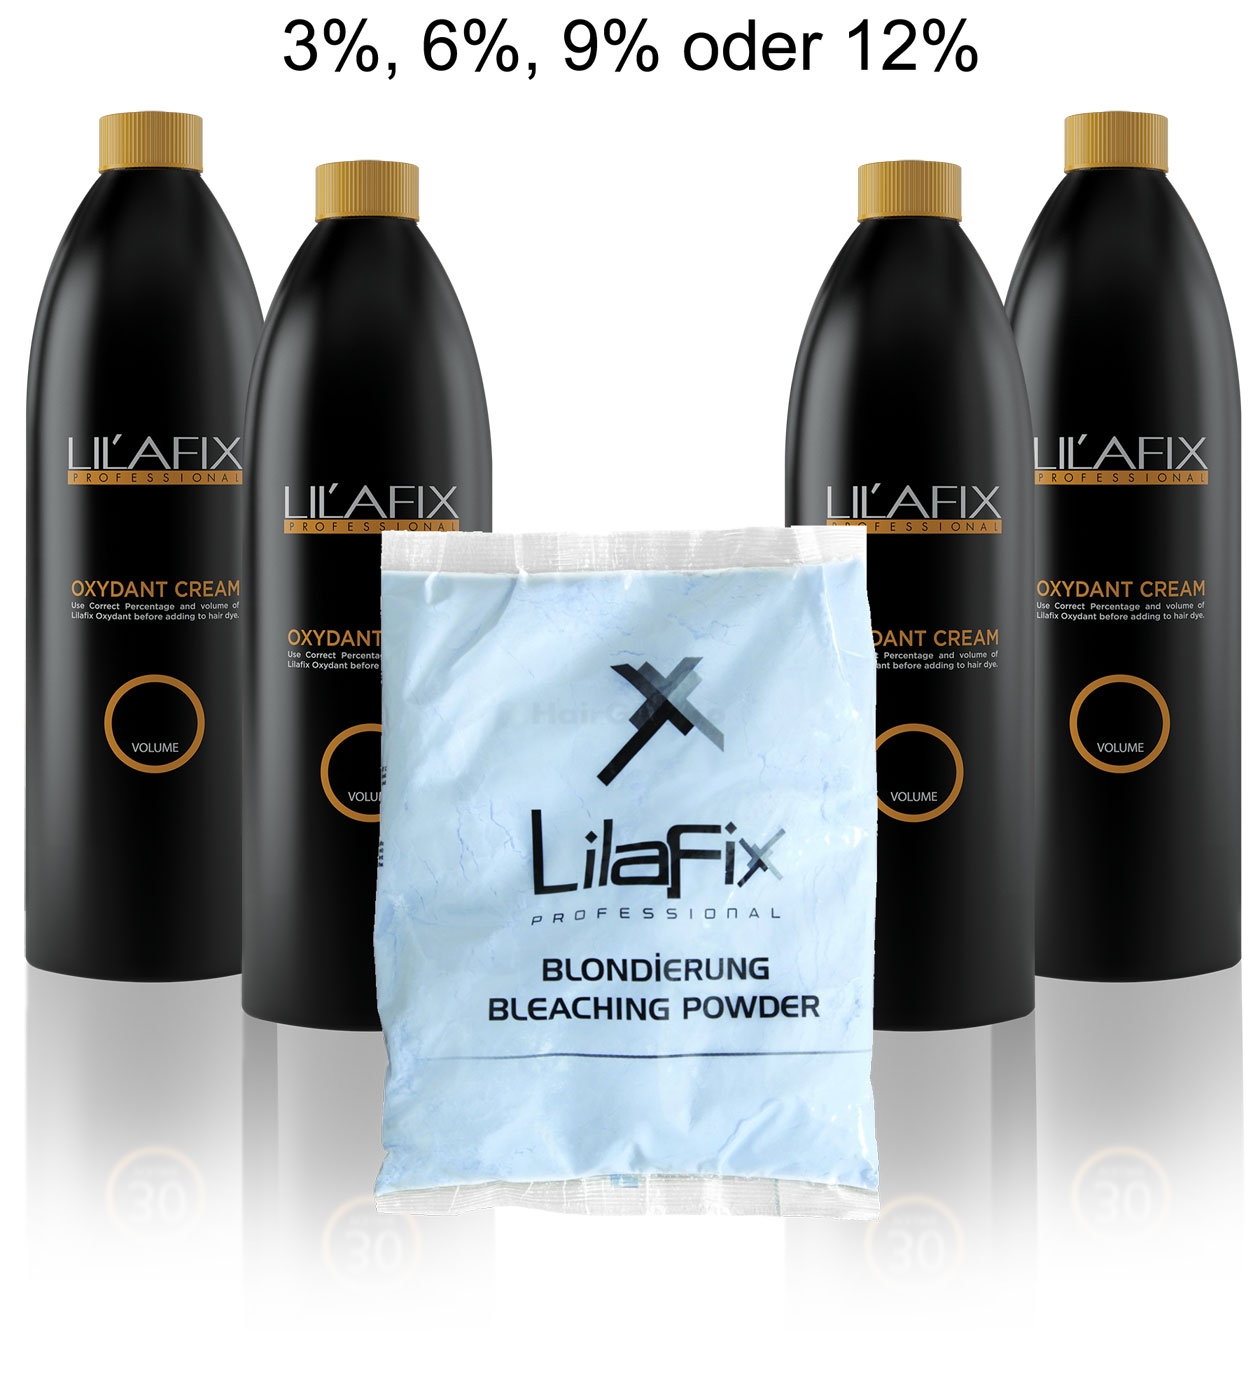 Lilafix Oxydant Cream Oxidant Wasserstoff 3% 4x 1l = 4l + Blondierung 500g